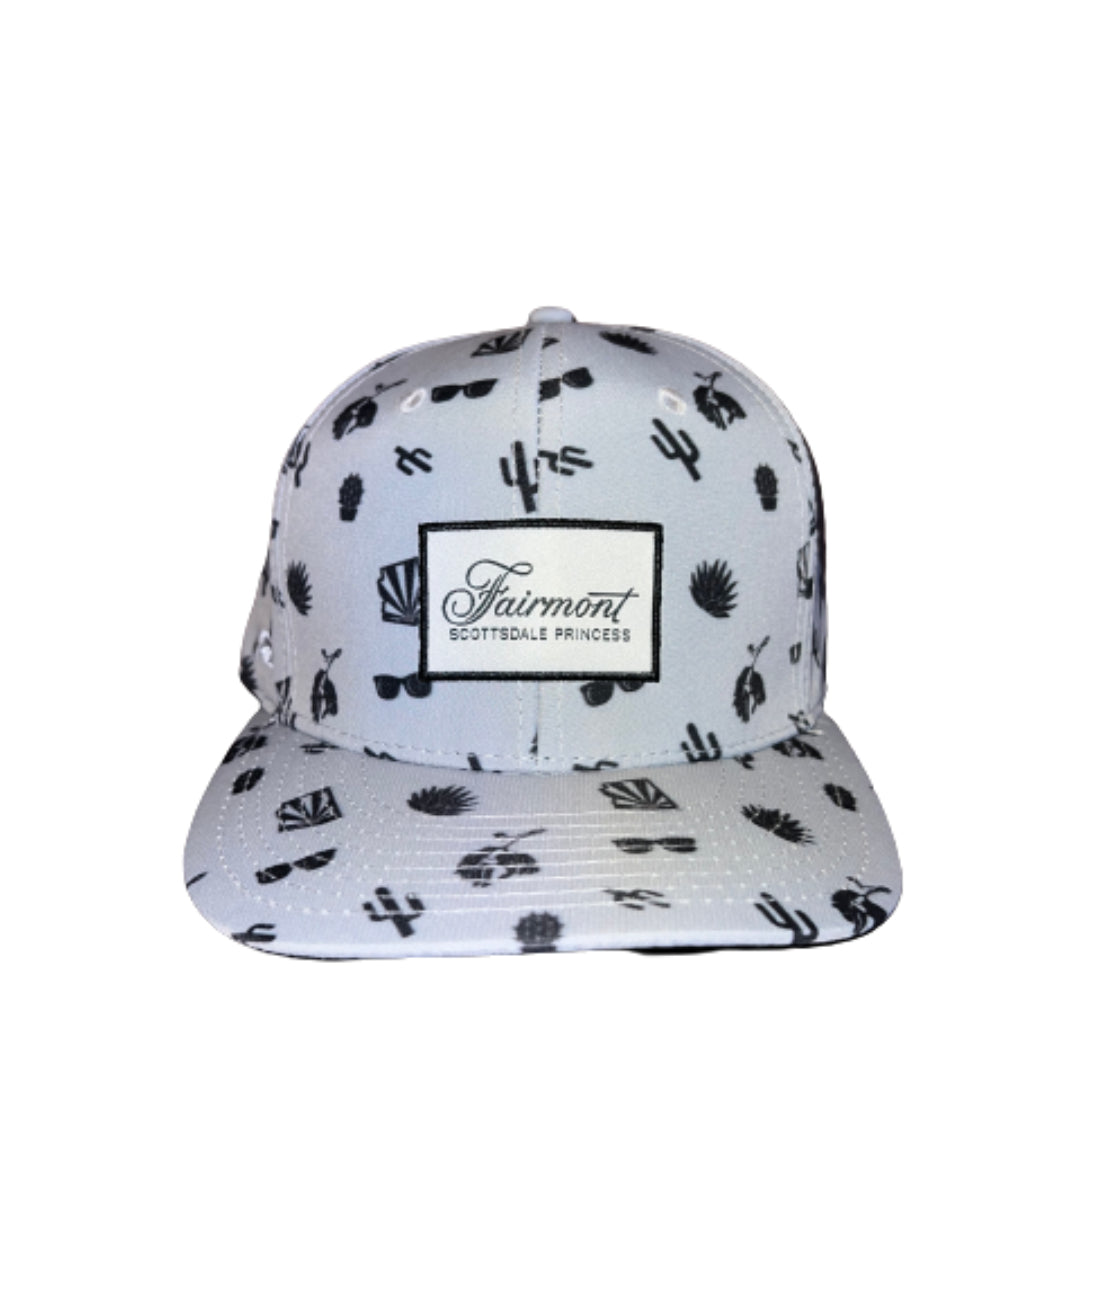 Gray Patterned Fairmont Scottsdale Princess Logo Hat